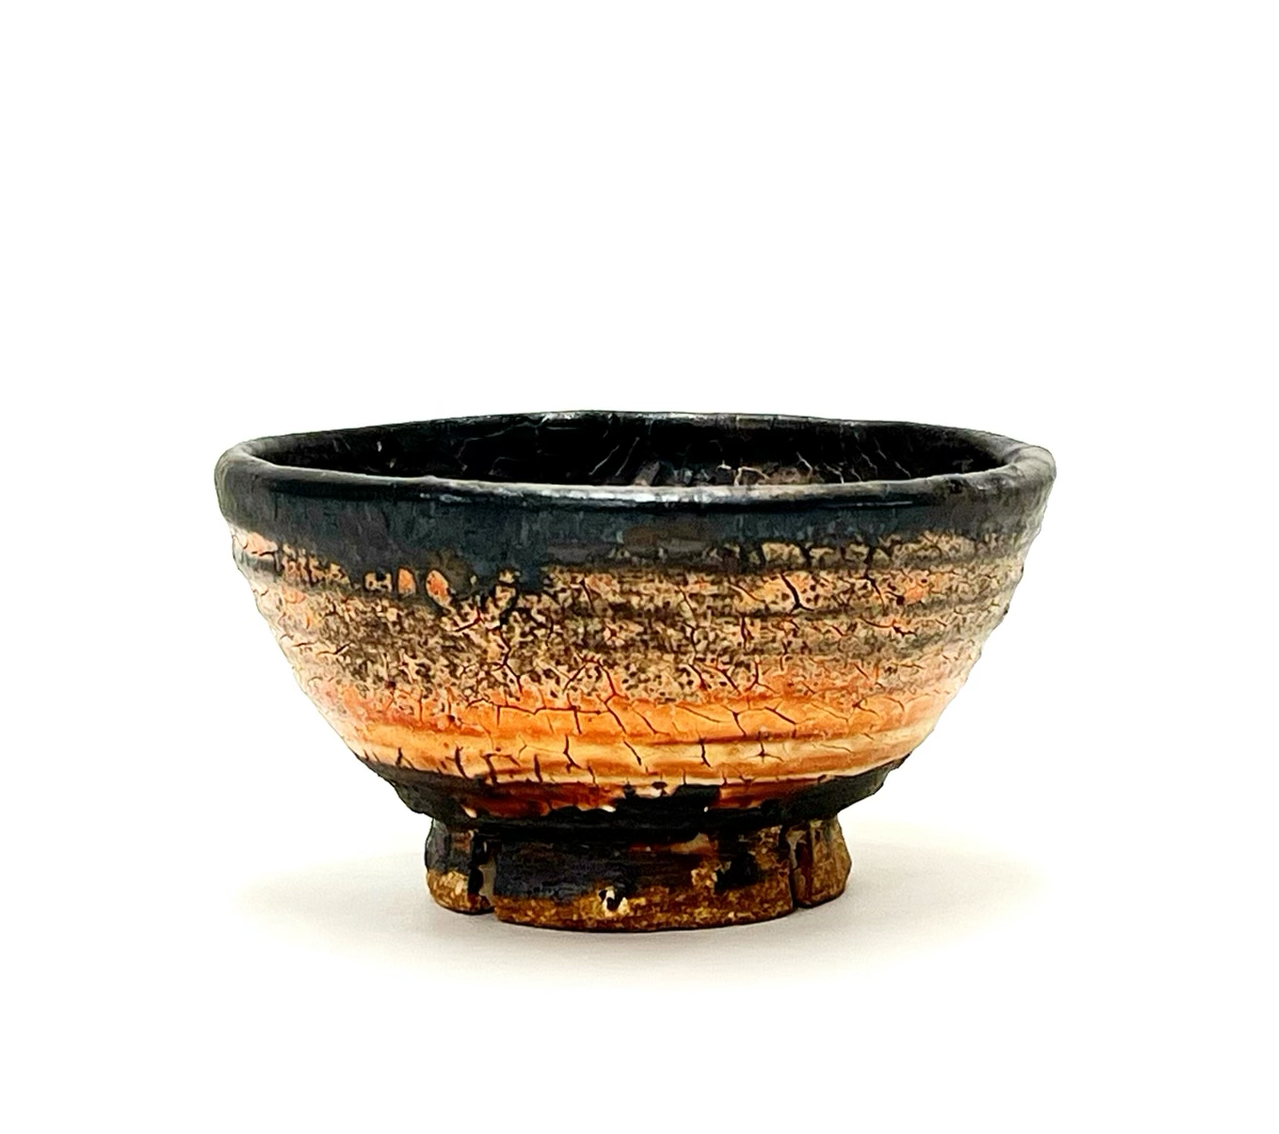 #MA22-19 "Vessel" by Michael Ashley (c) - ceramic bowl